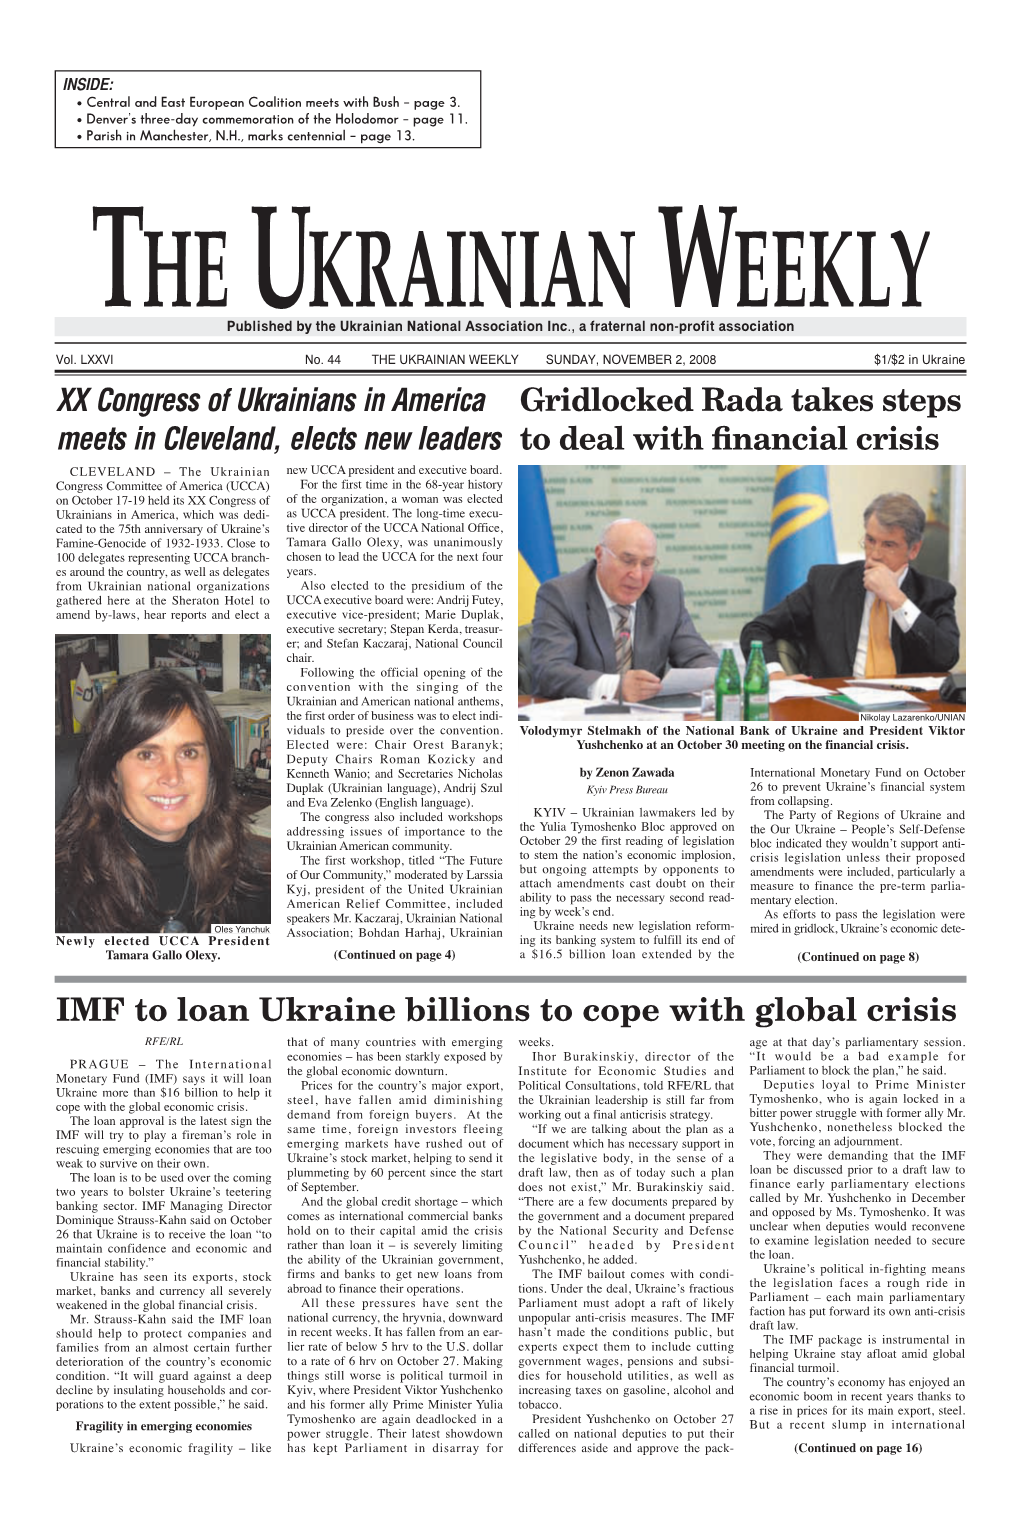 The Ukrainian Weekly 2008, No.44